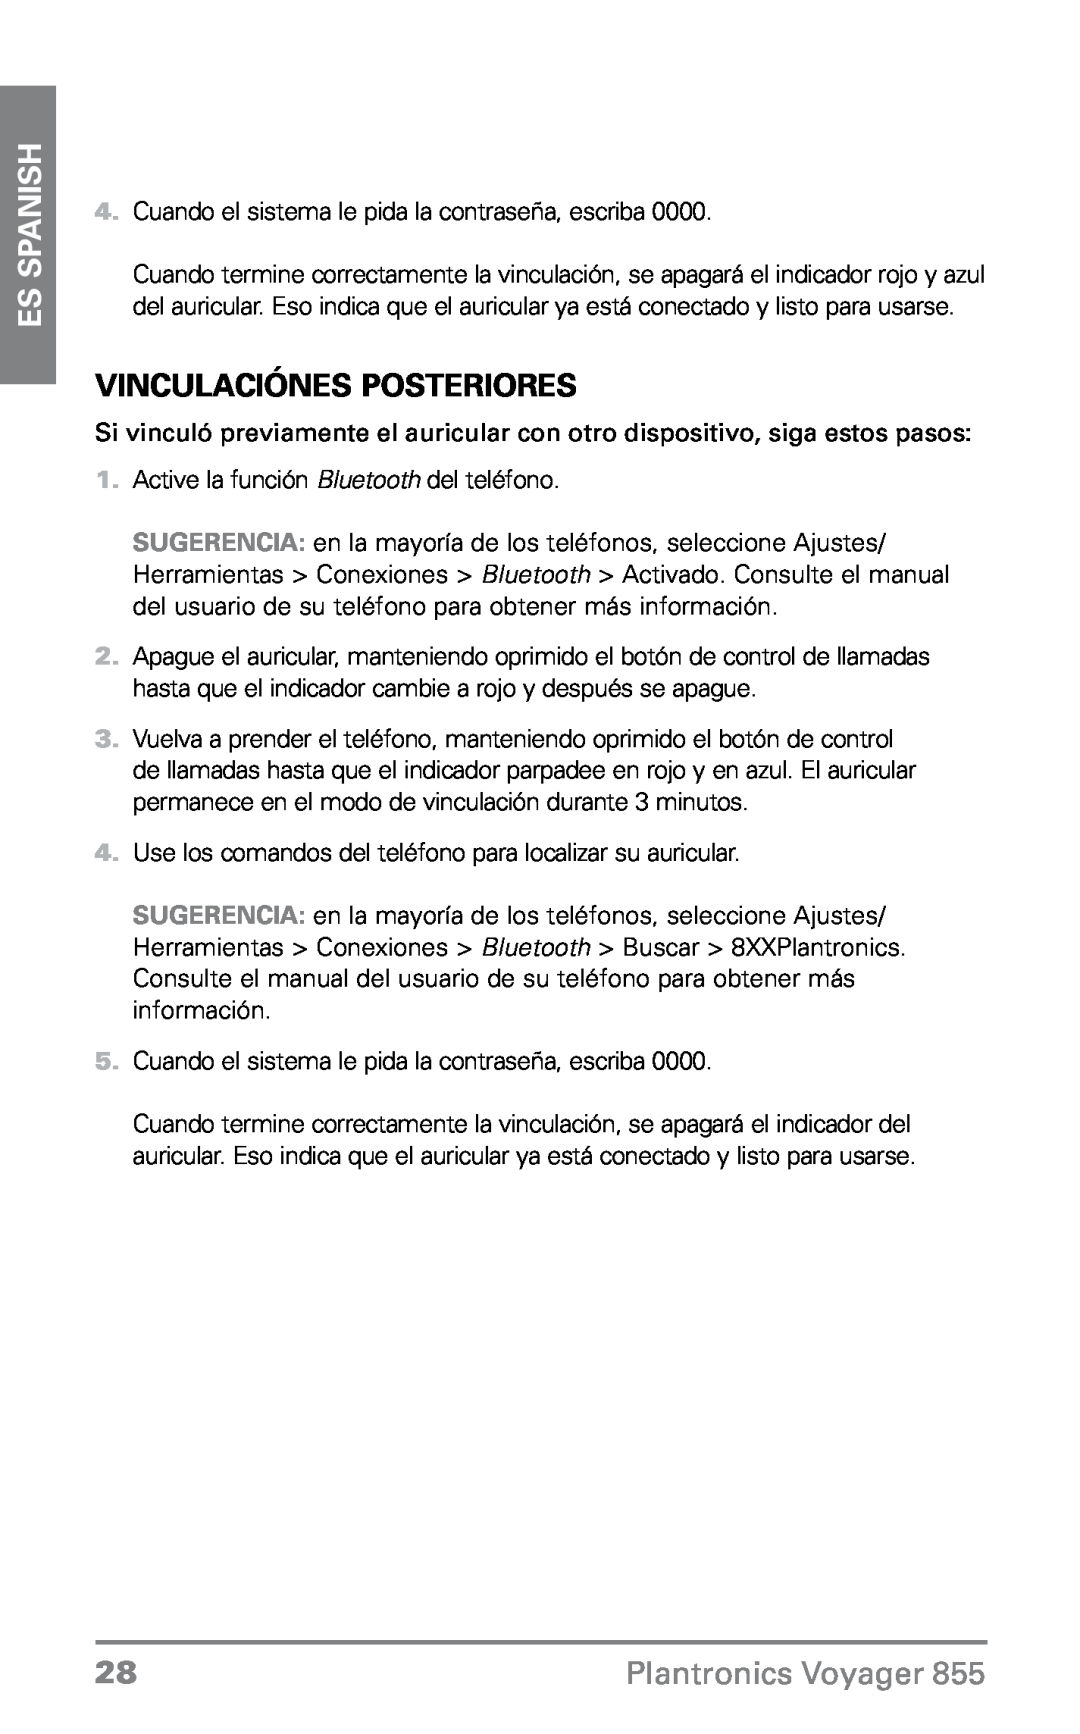 Plantronics VOYAGER855 manual VinculaciónEs posteriores, ES Spanish, Plantronics Voyager 